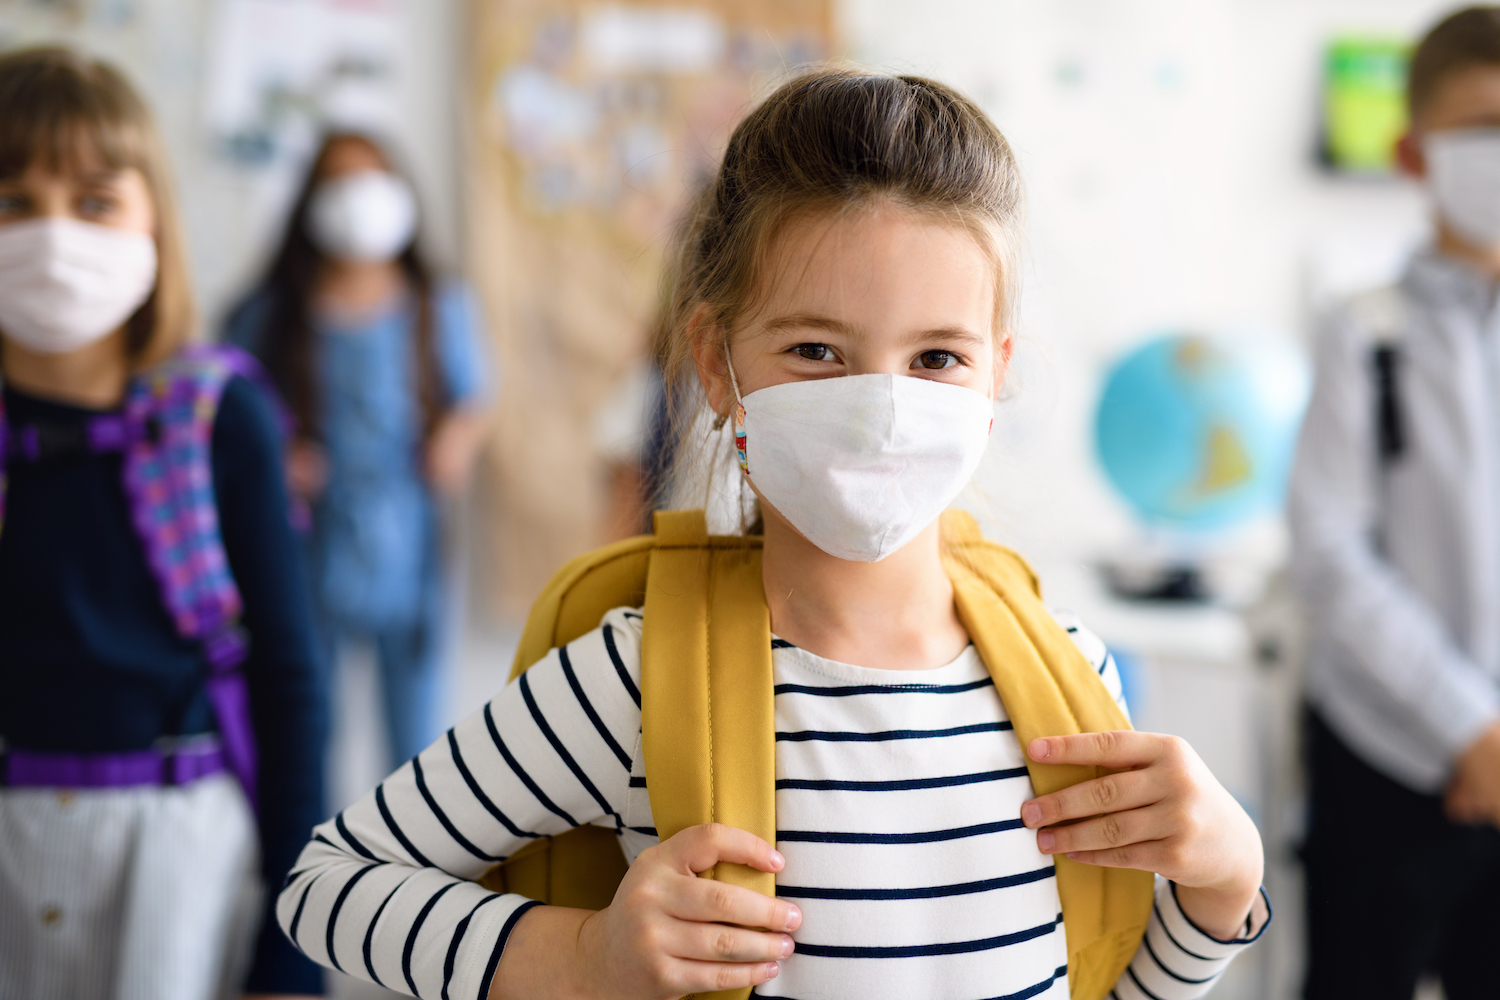 Girl in Mask in School Hallway